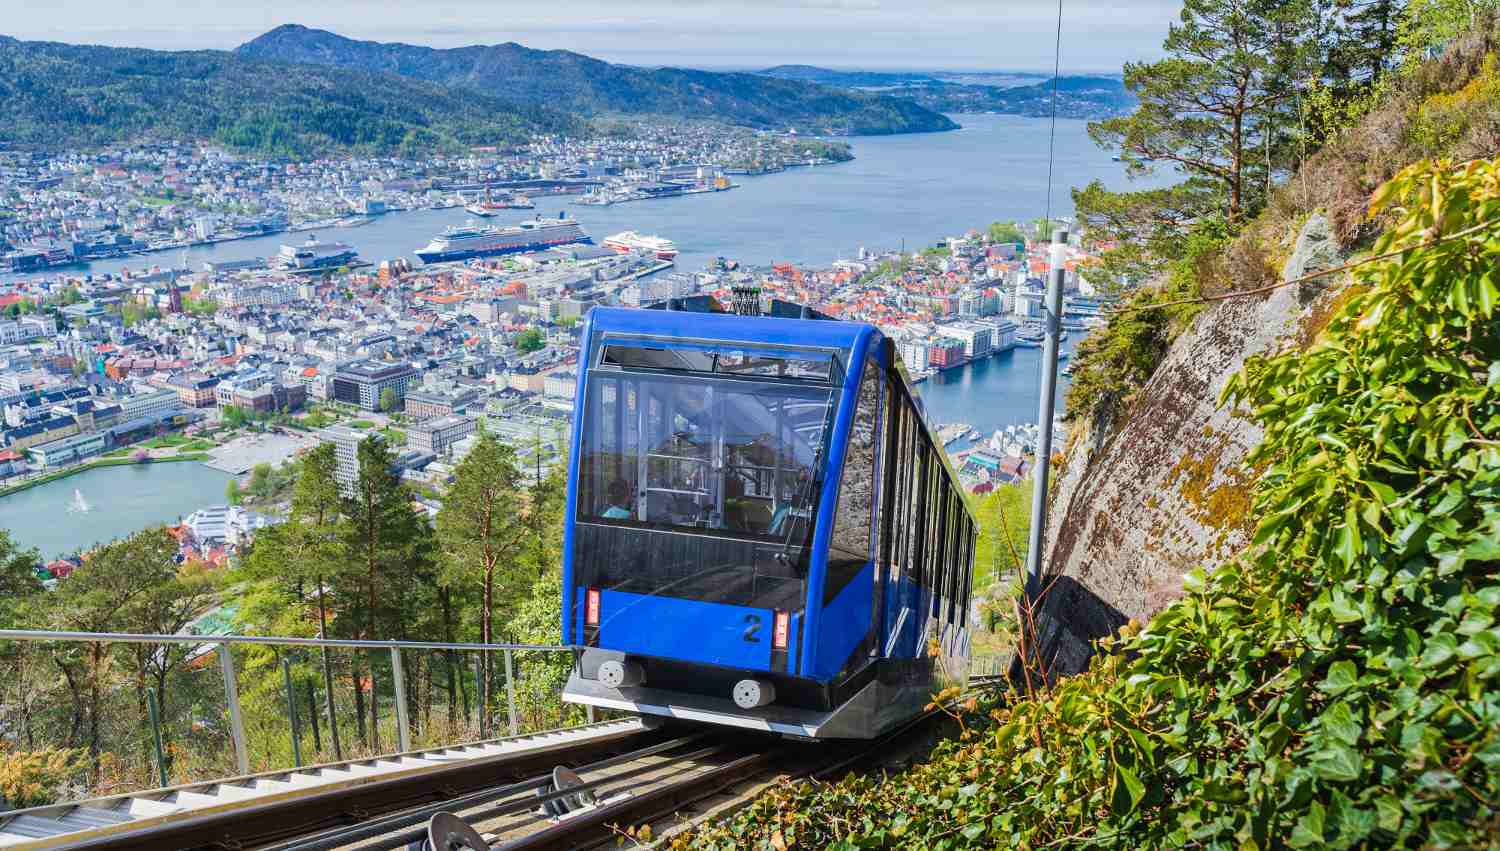 Weekend in Bergen Fløibanen funicular